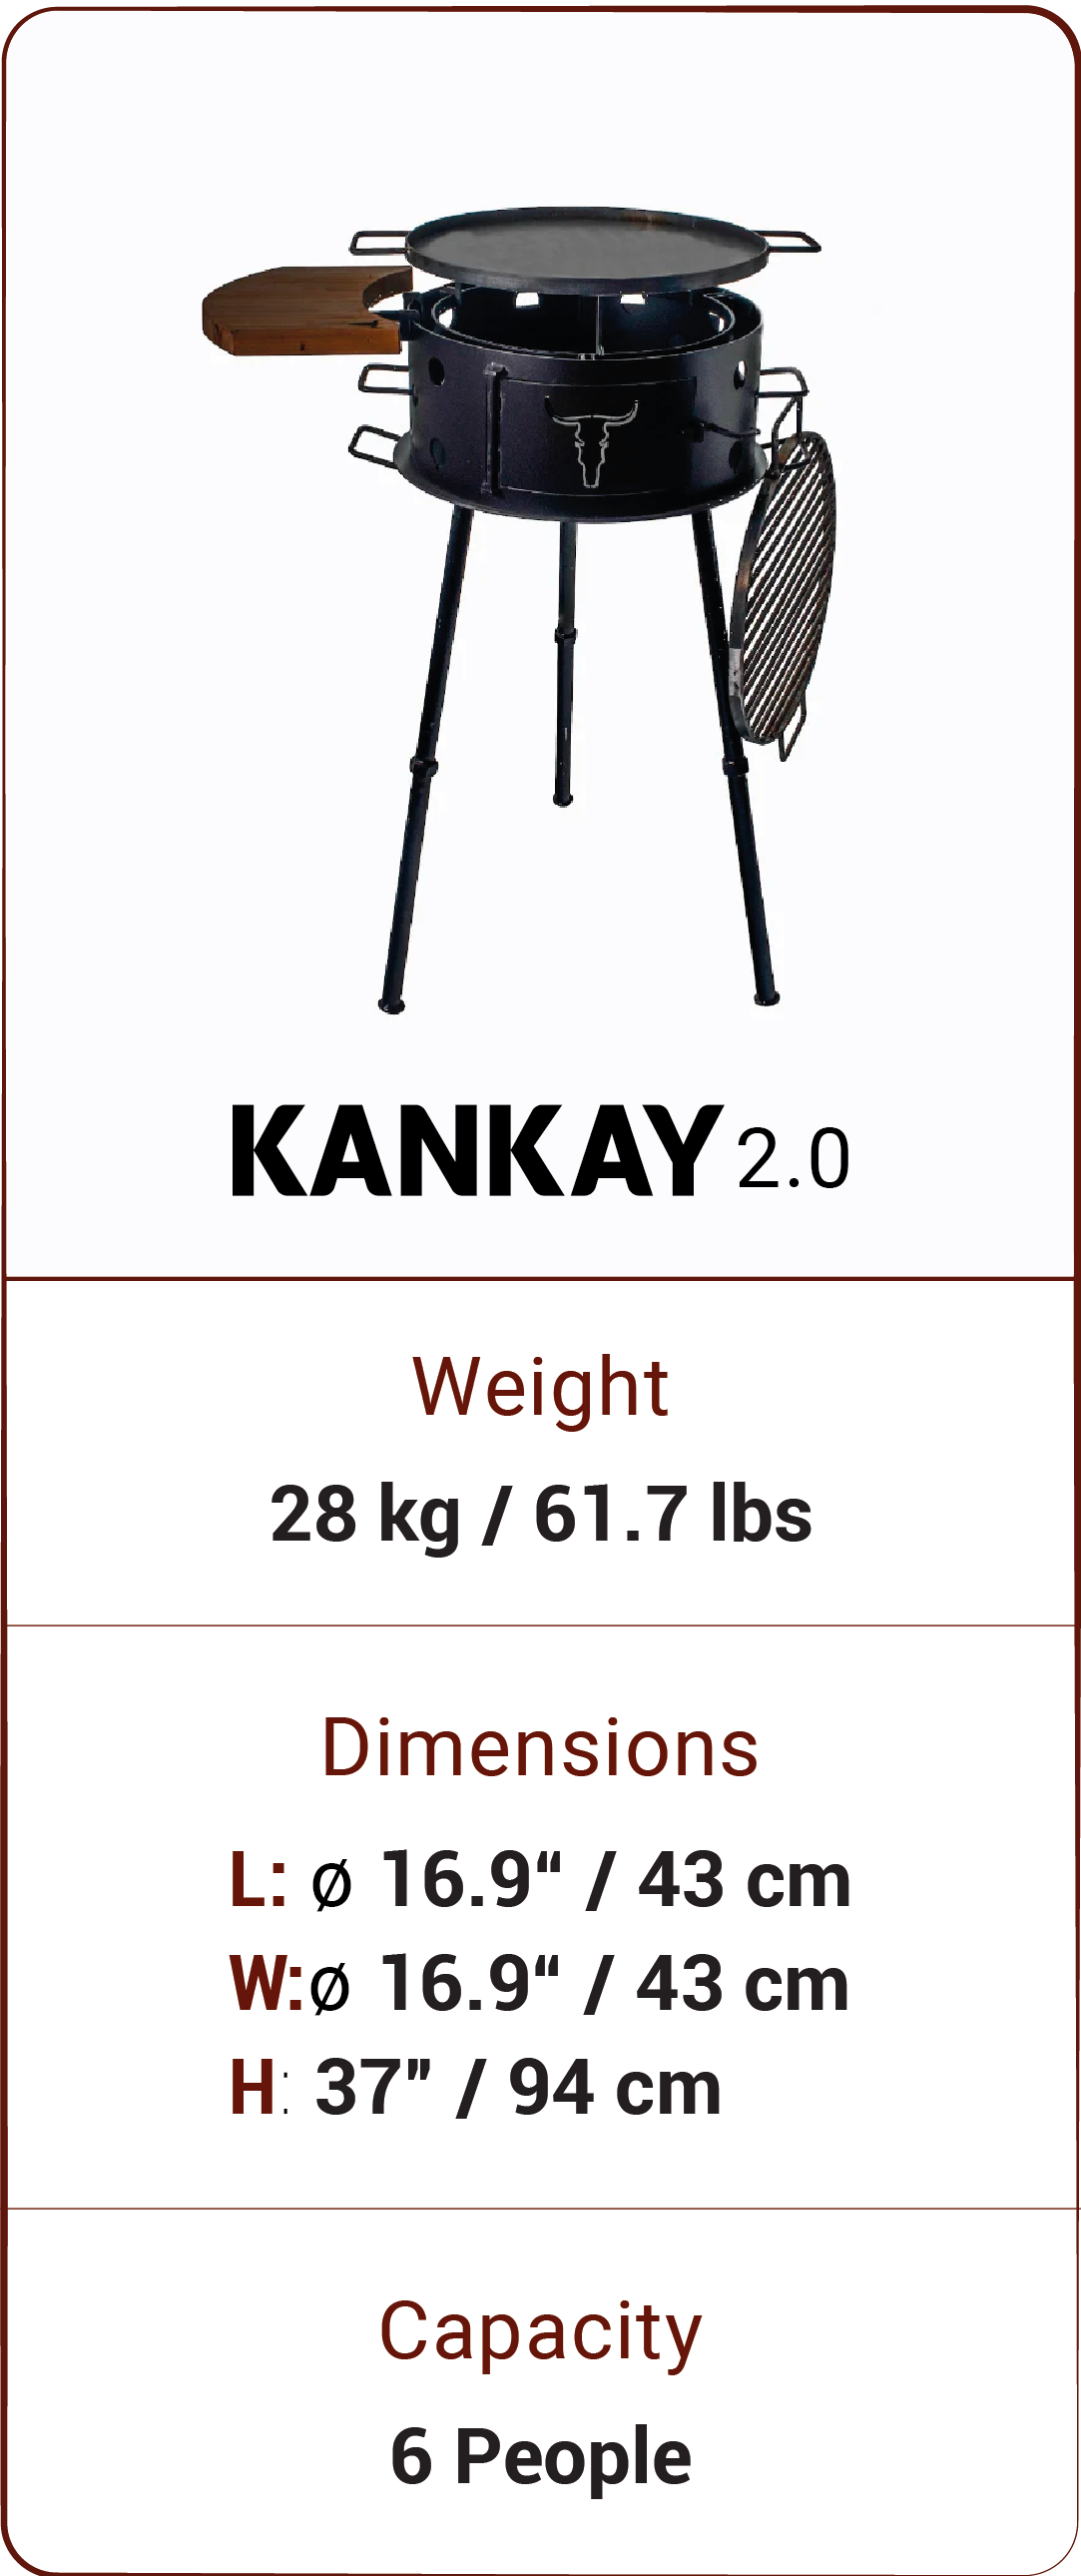 Buy Flat Top Grill 720 online at Kankay